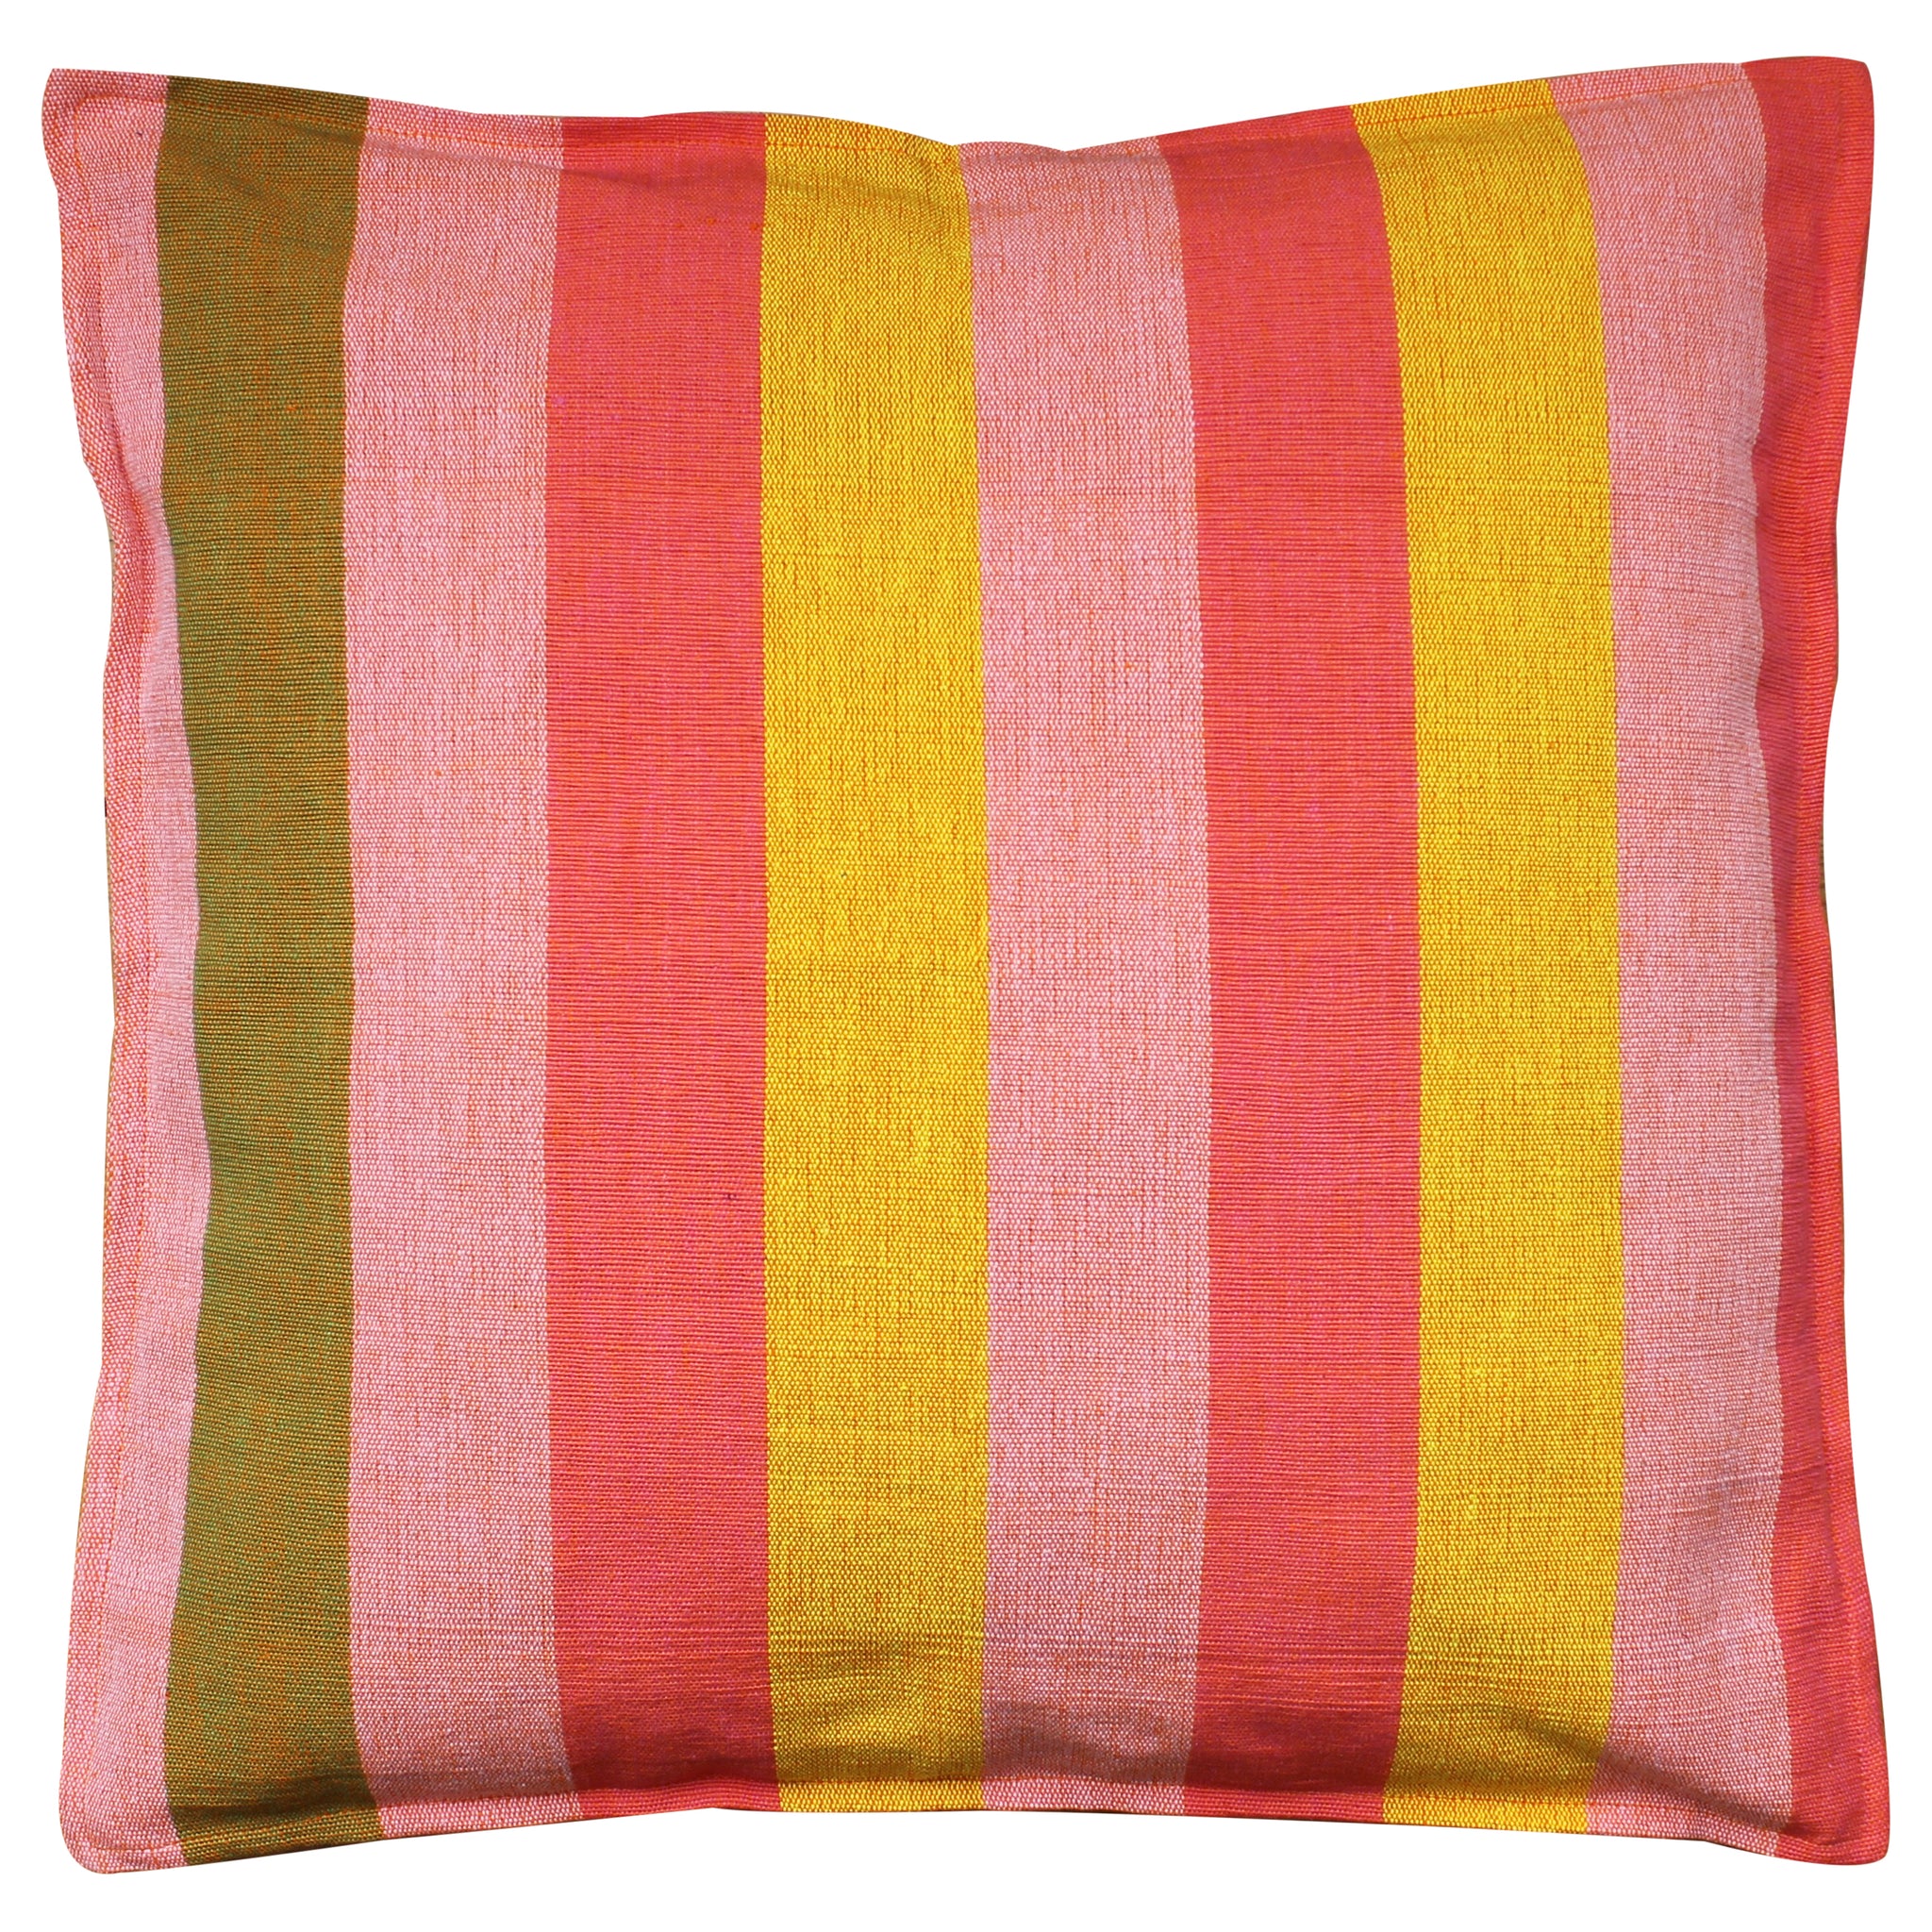 Barefoot handloom cushion cover - rhubarb-and-custard